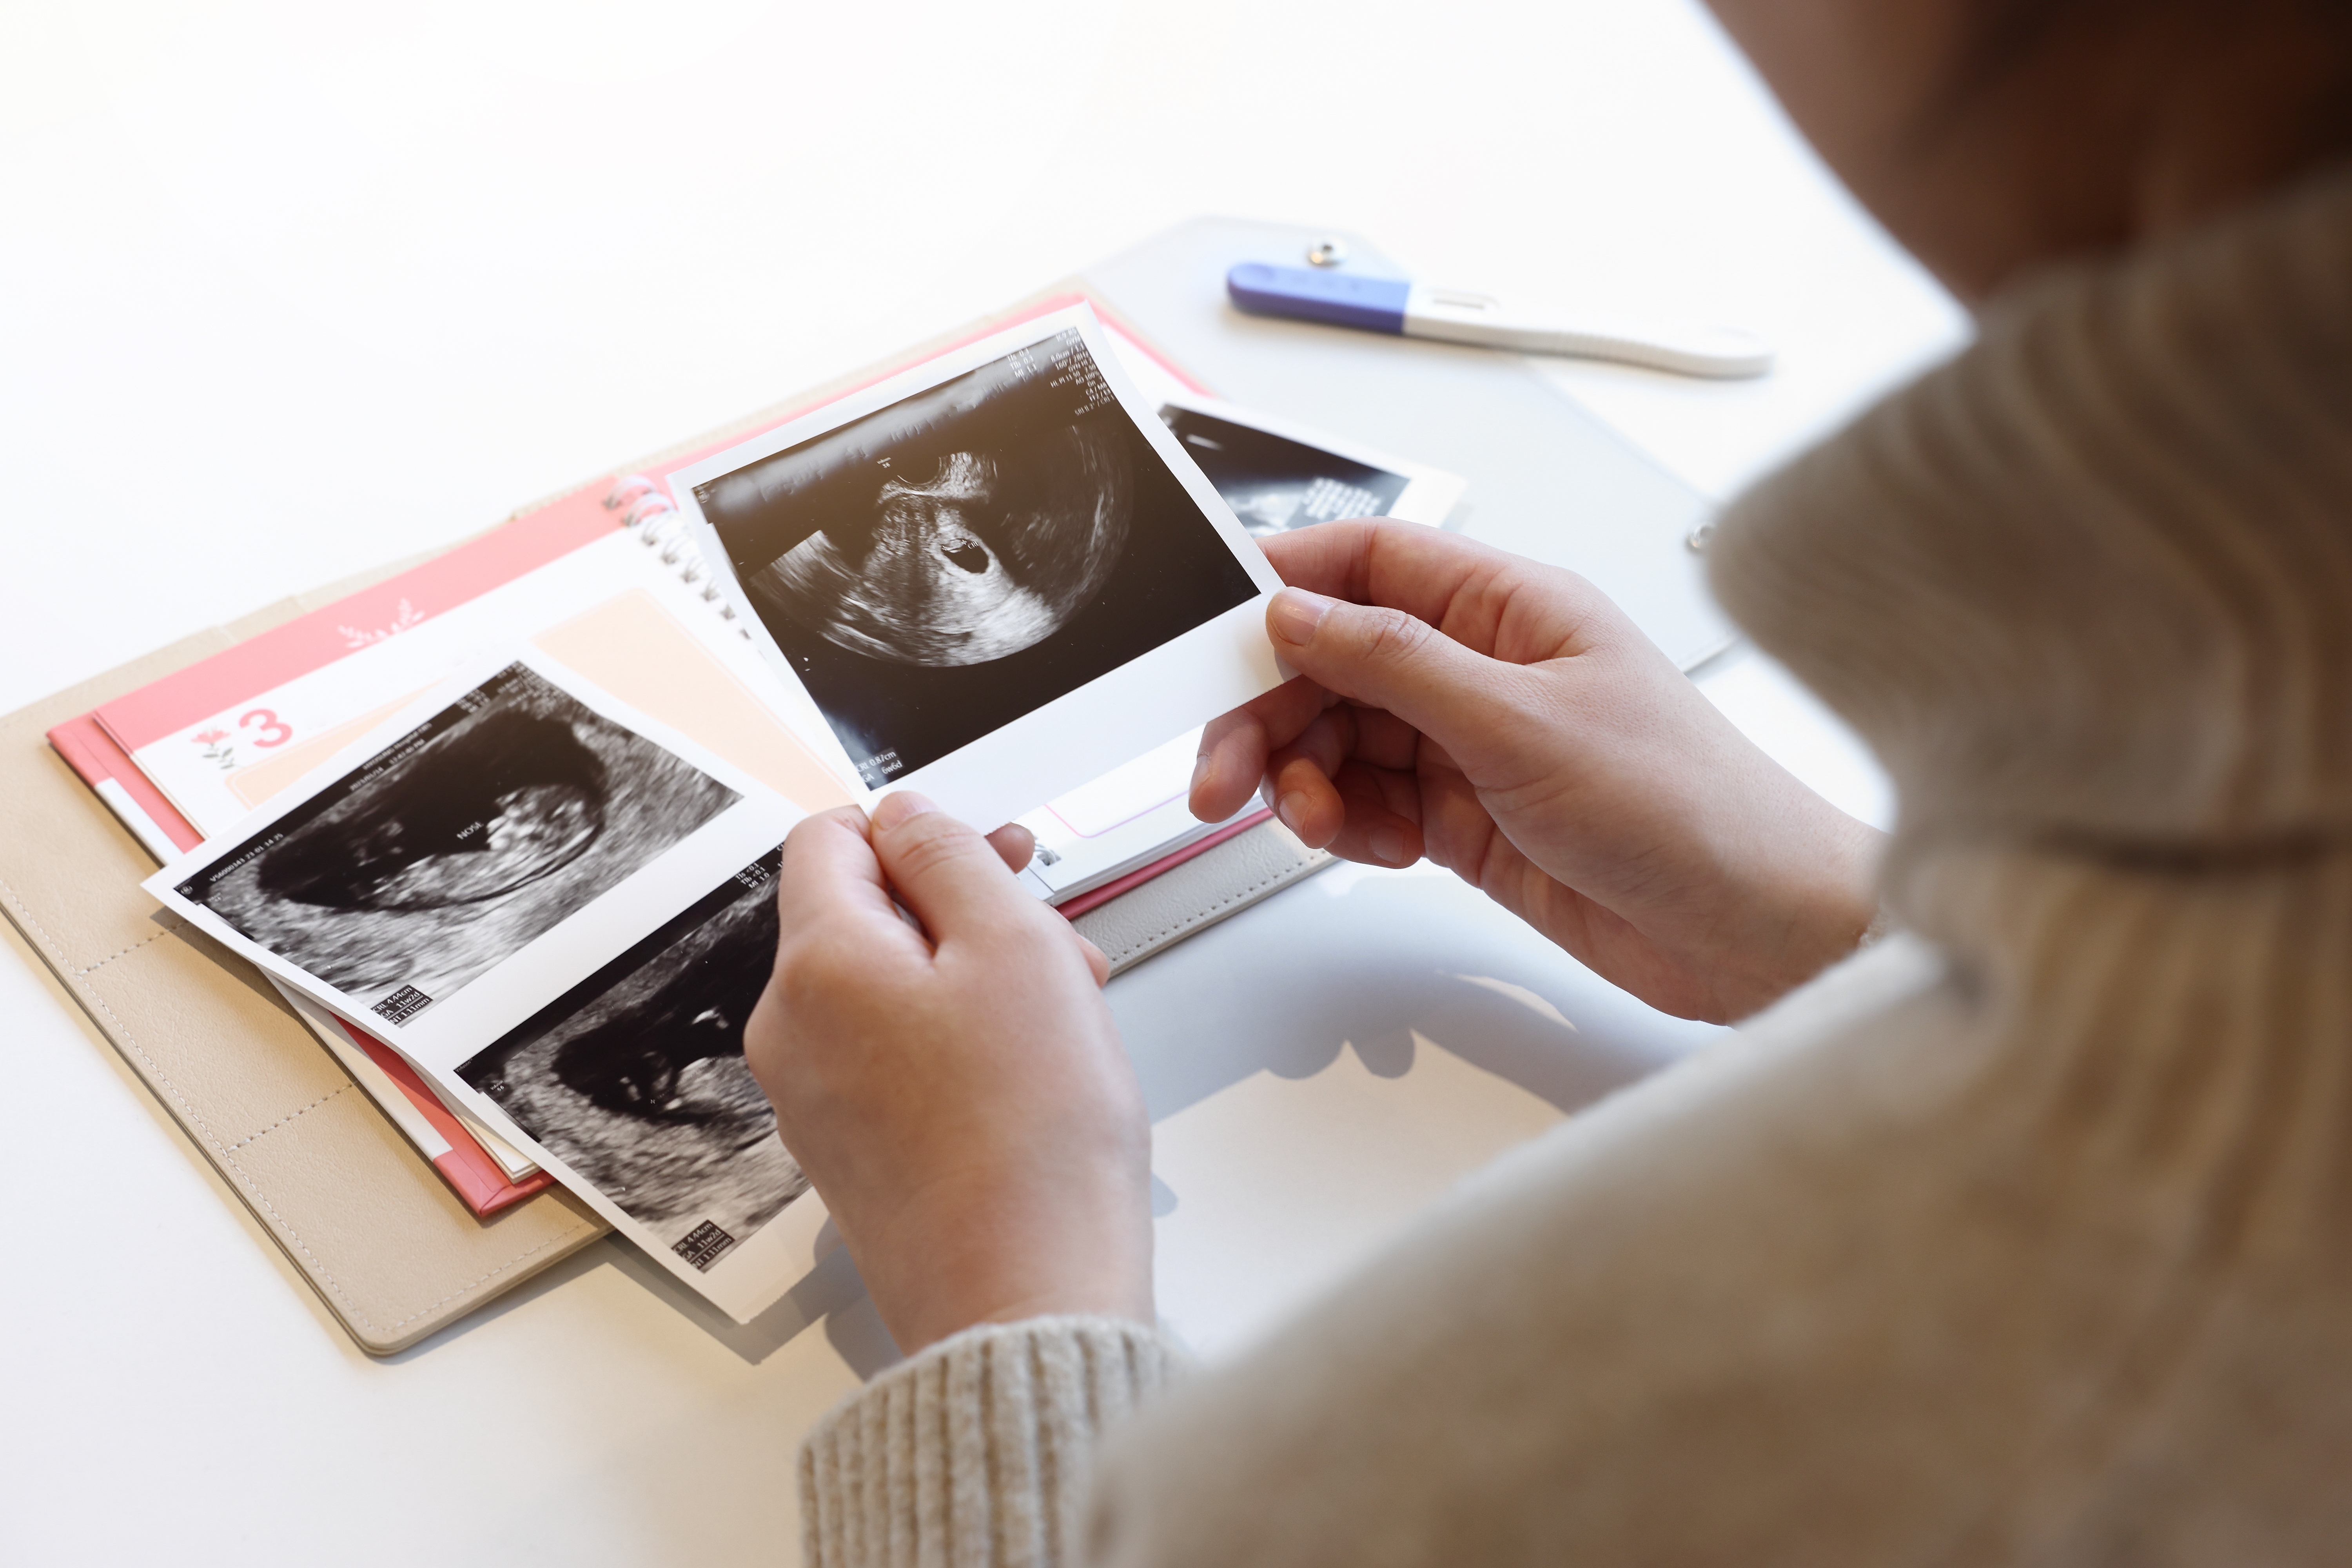 A pregnant woman | Source: Shutterstock